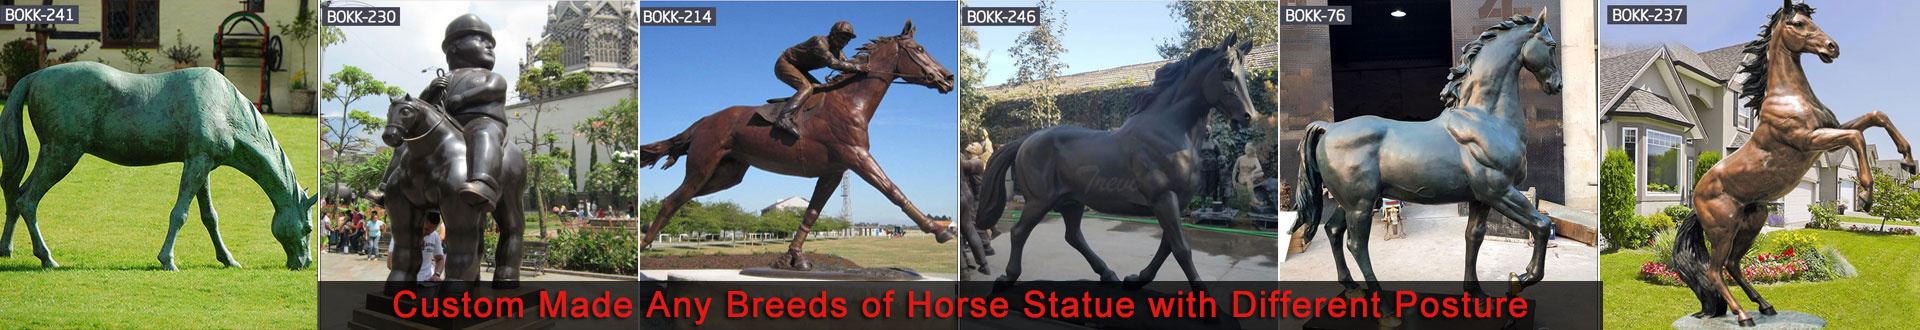 life size horse sculptures for sale statues horses leg raised